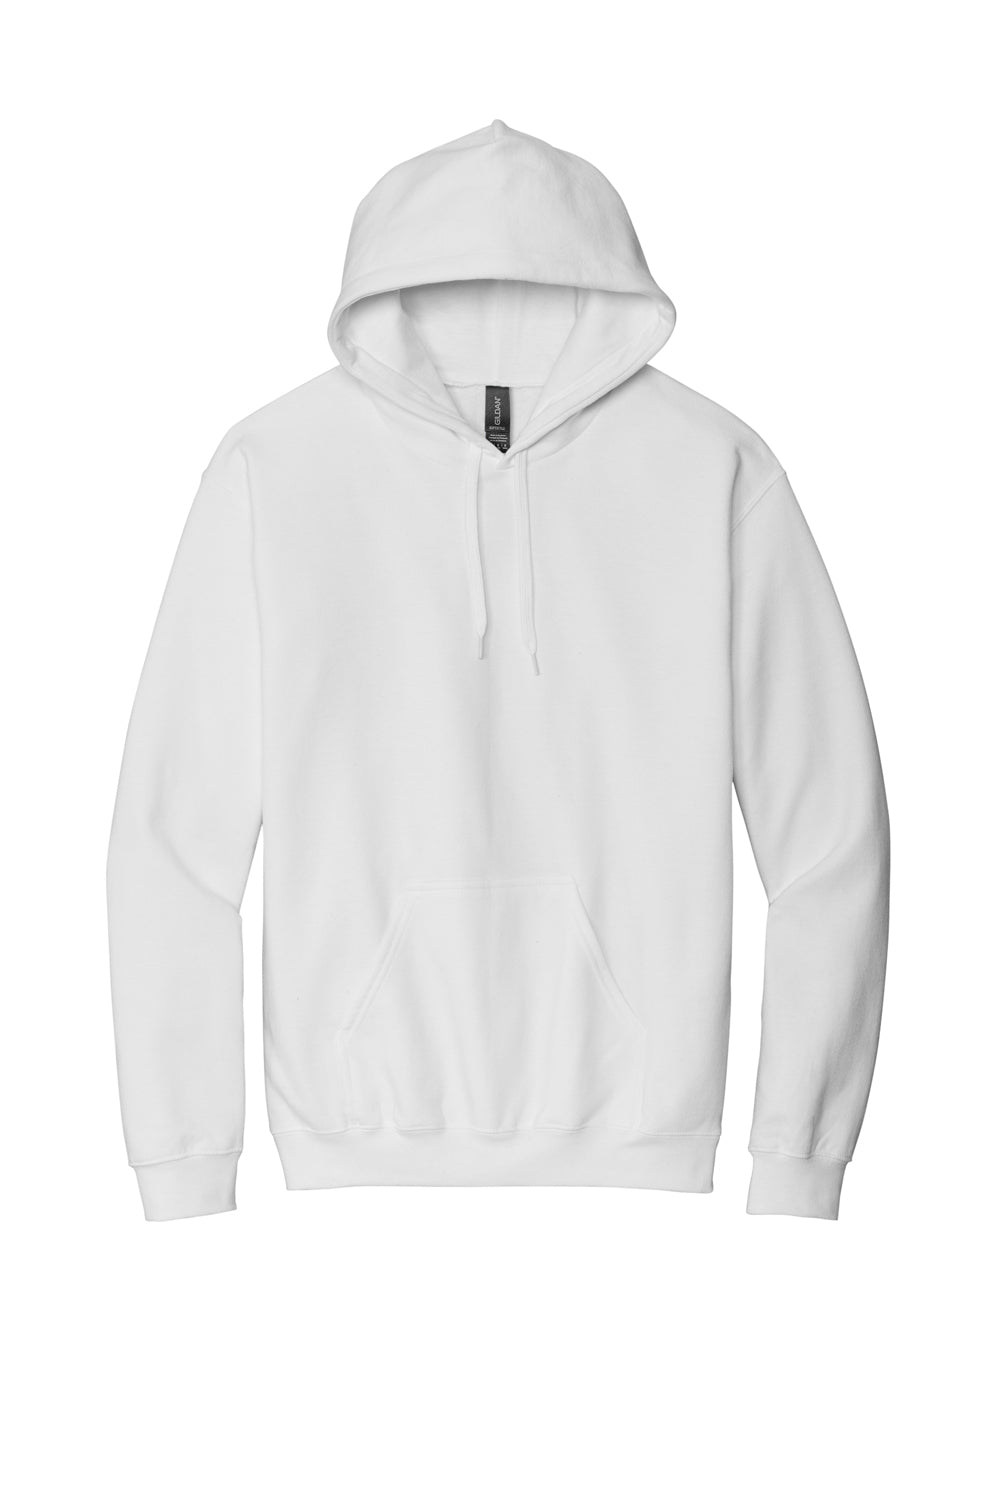 Gildan SF500 Softstyle Hooded Sweatshirt Hoodie White Flat Front